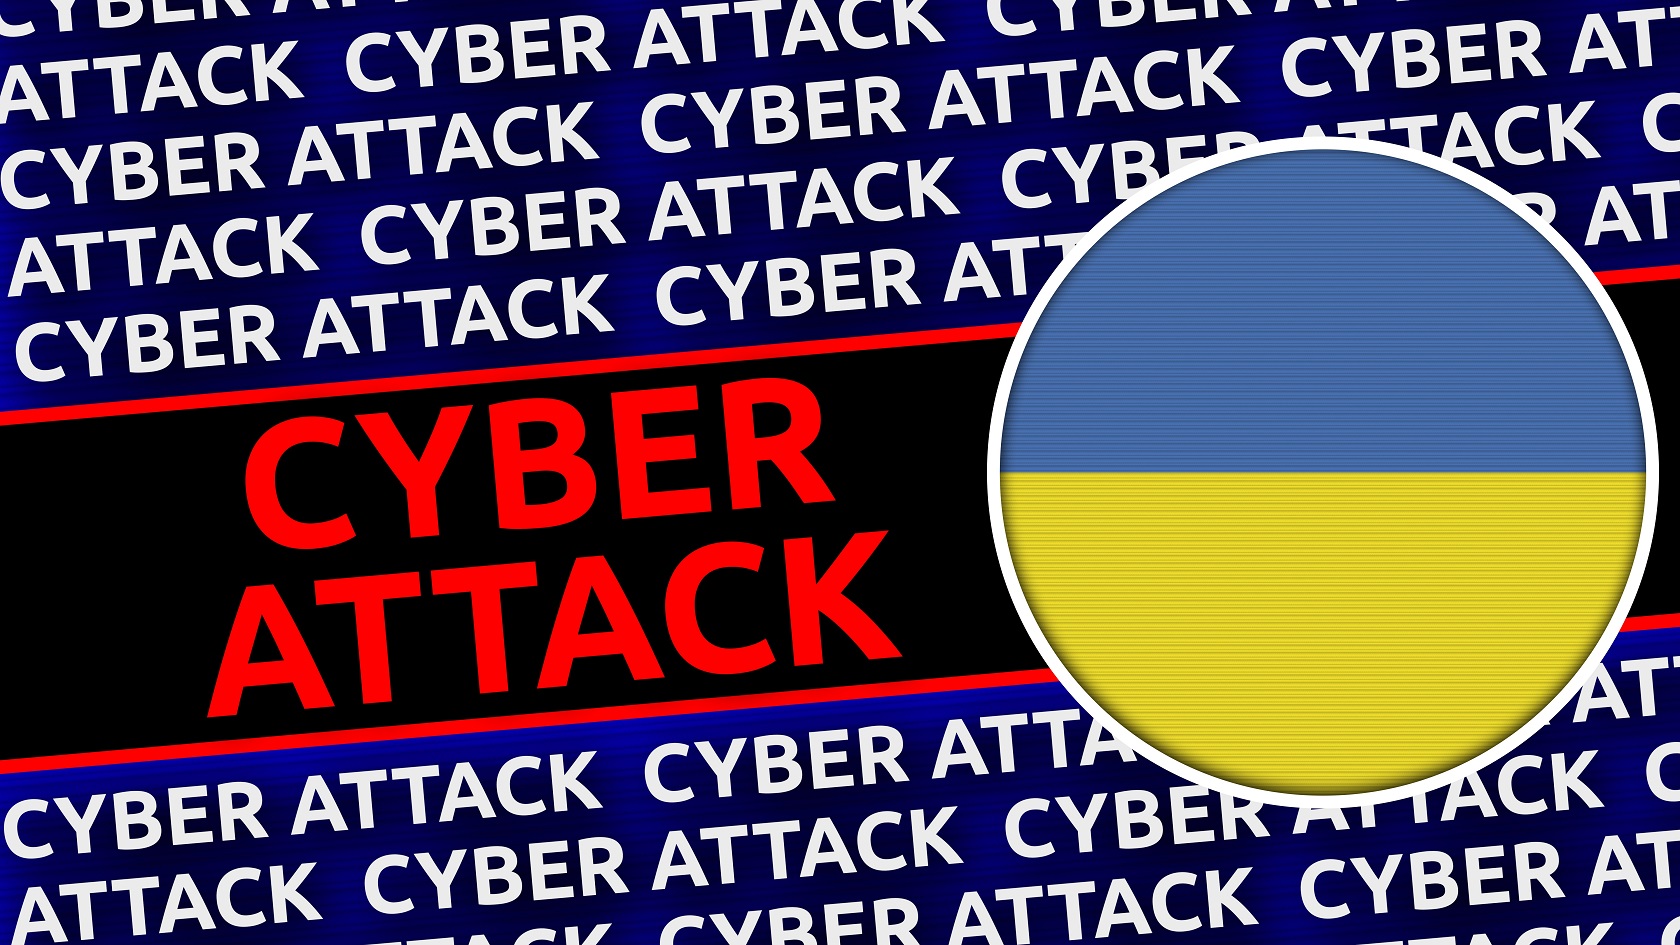 Attaque informatique de très grande ampleur en Ukraine